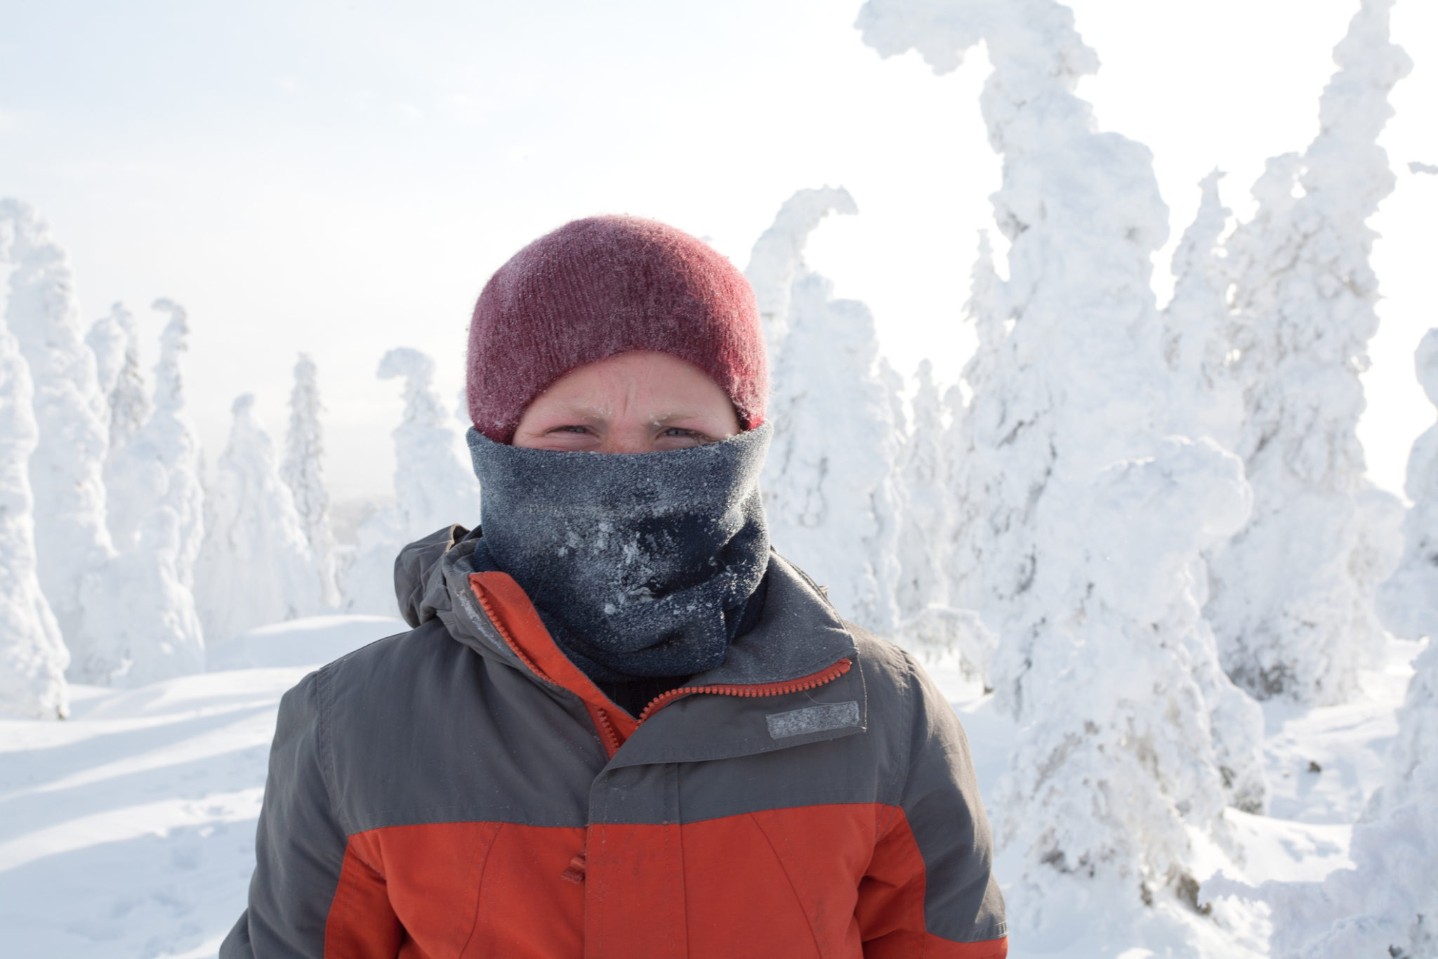 Exploring an Extreme Winter Landscape